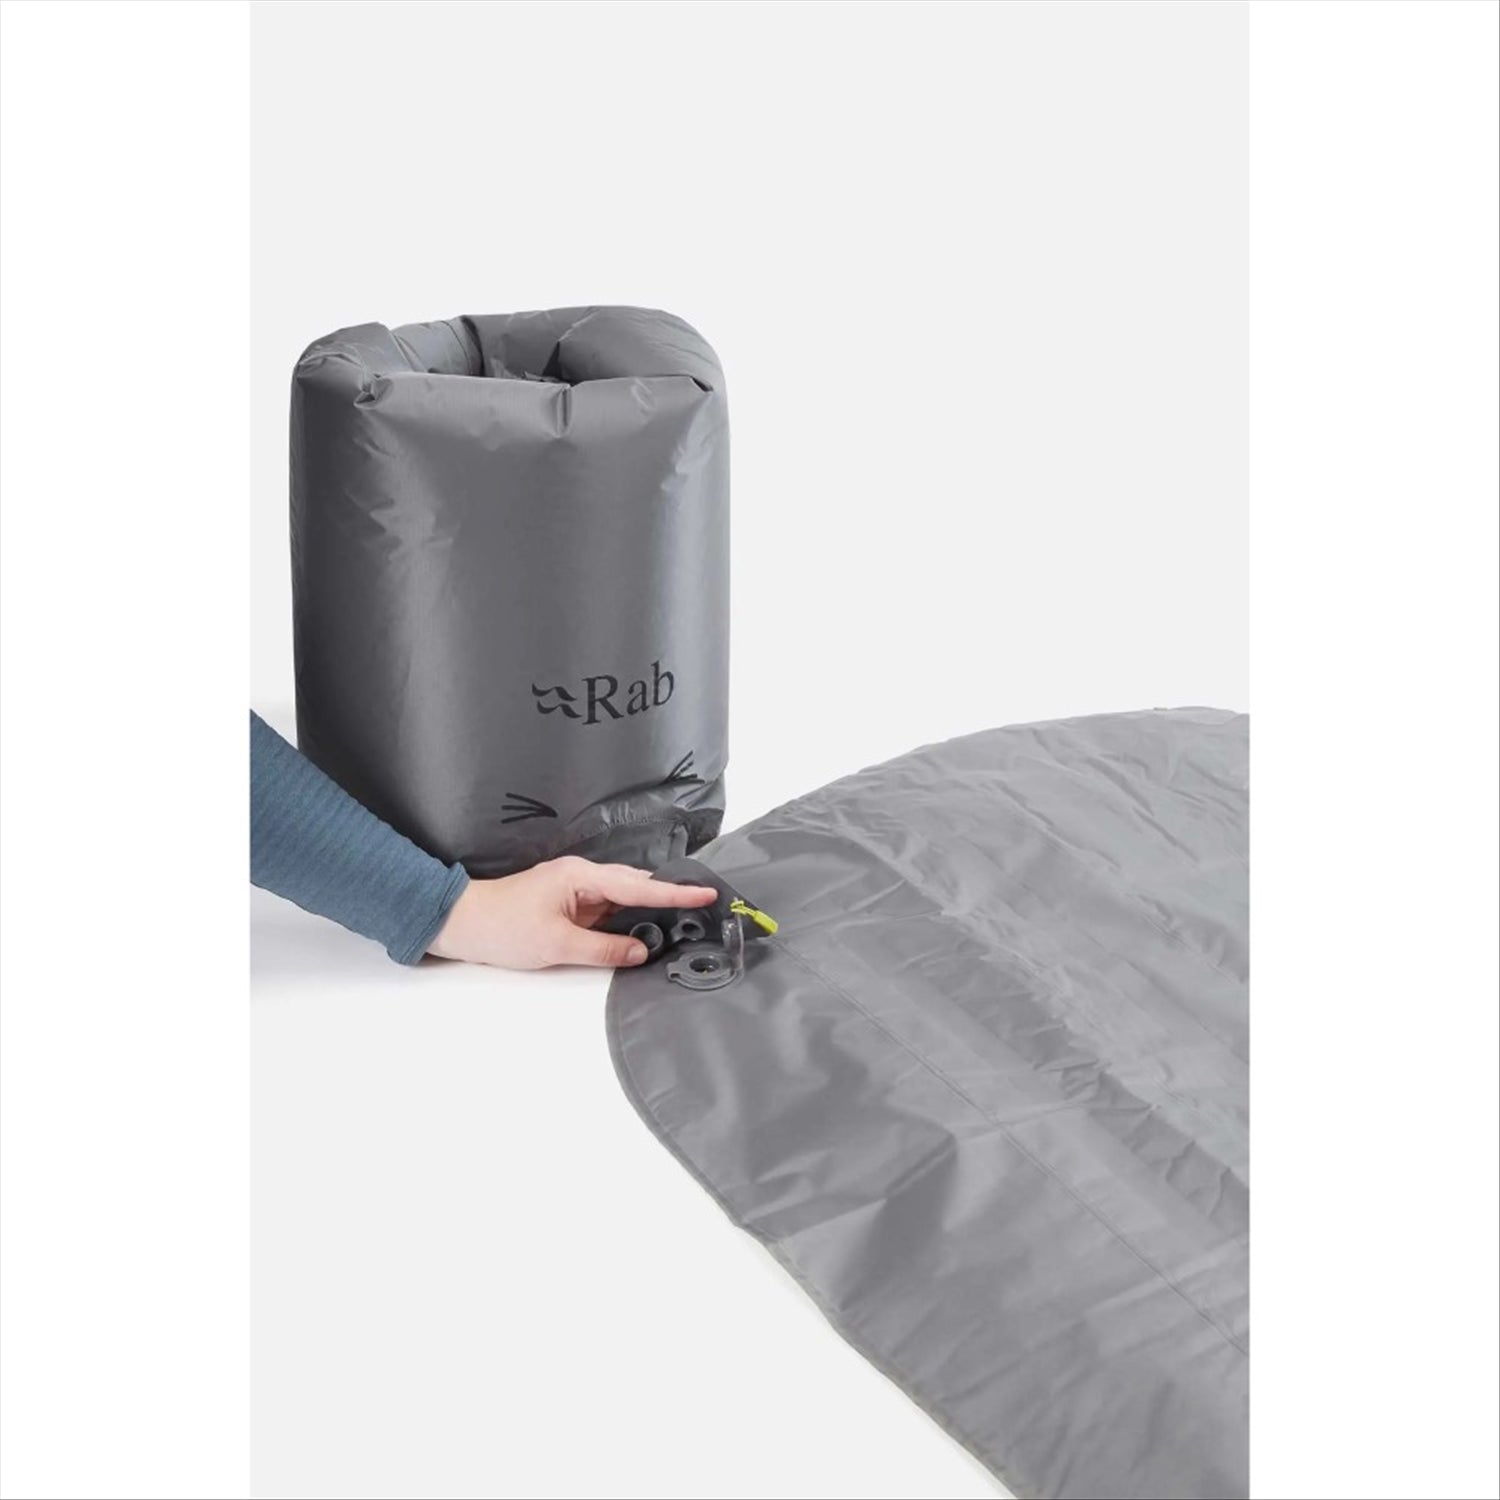 Rab Rab Ionosphere 5 Inflatable Sleeping Mat R-value 4.8